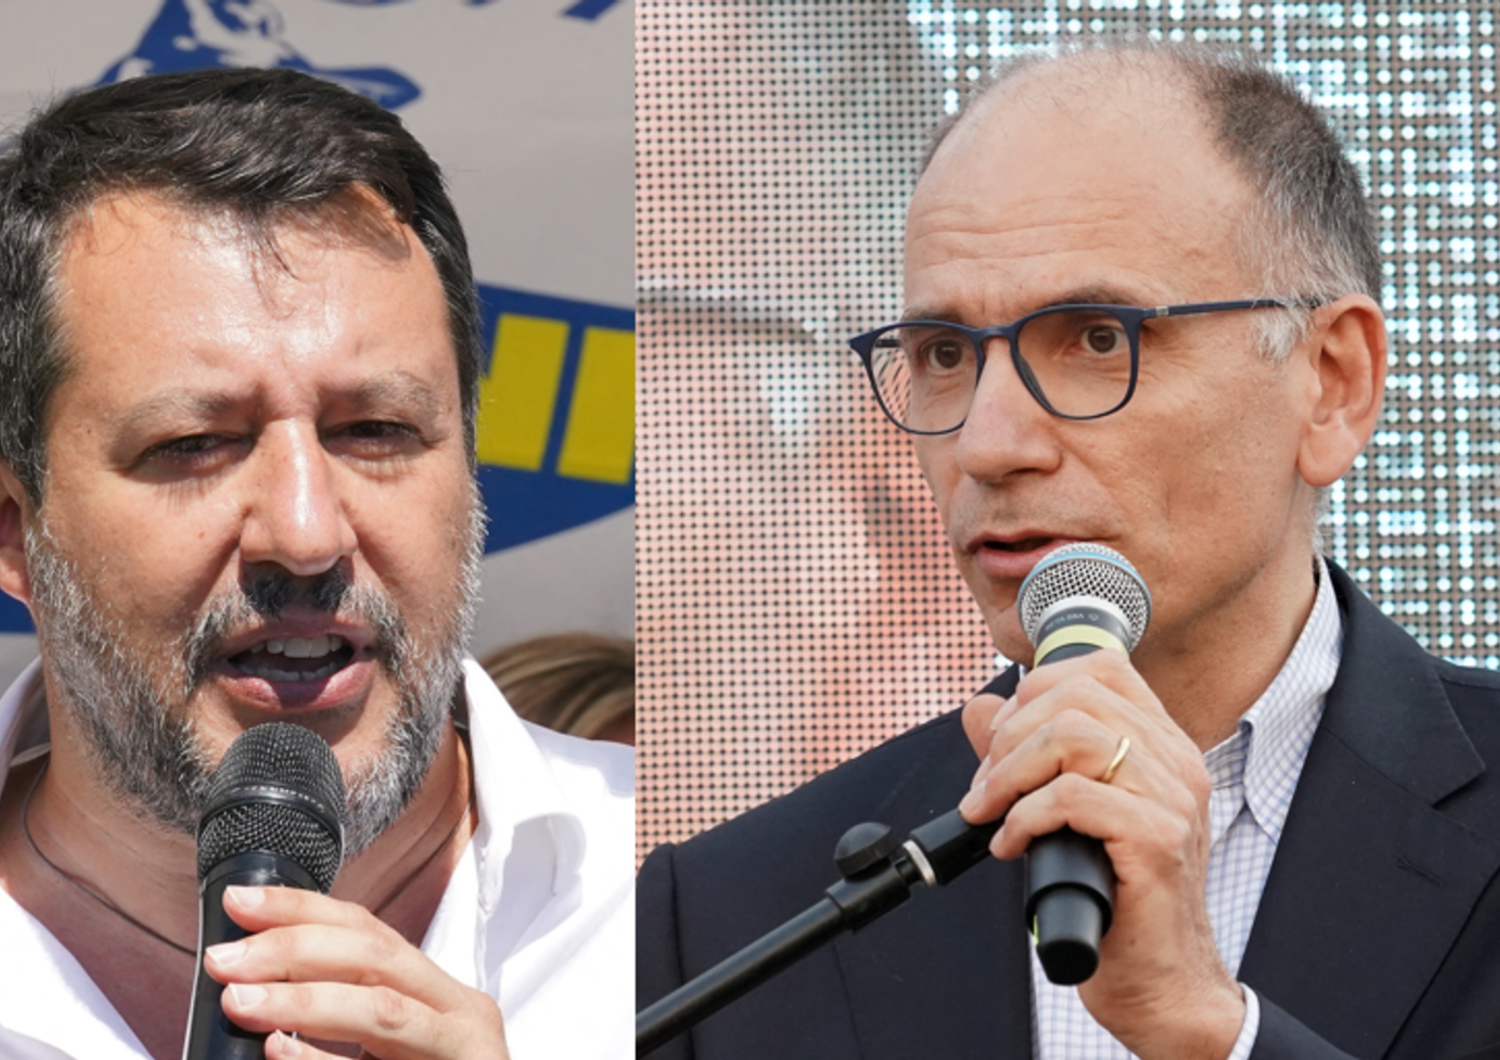 Matteo Salvini e Enrico Letta&nbsp;